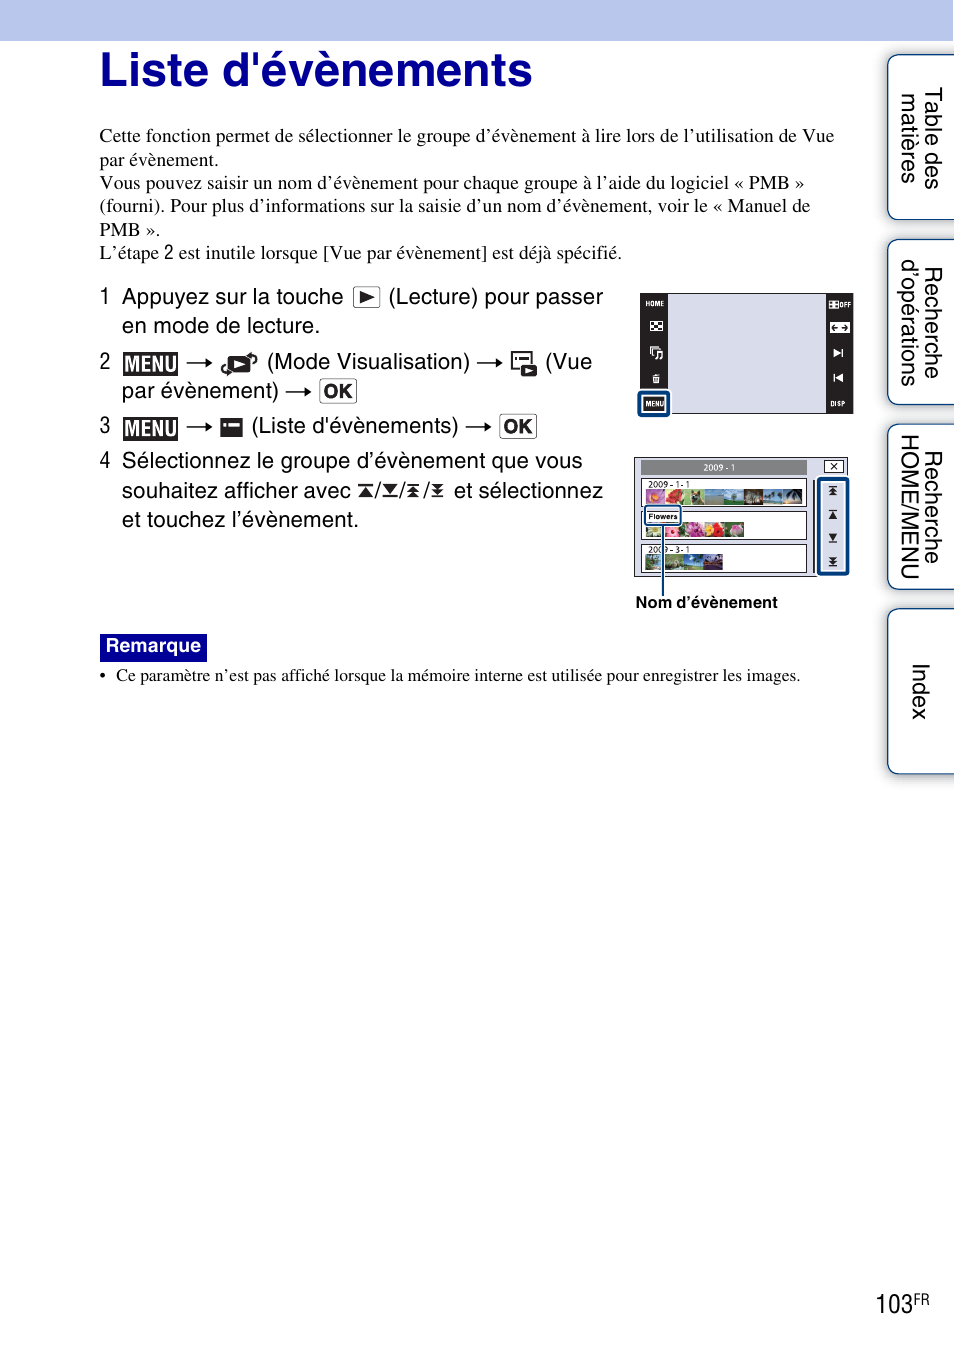 Liste d'évènements, Liste d'évènements) | Sony DSC-T900 Manuel d'utilisation | Page 103 / 171